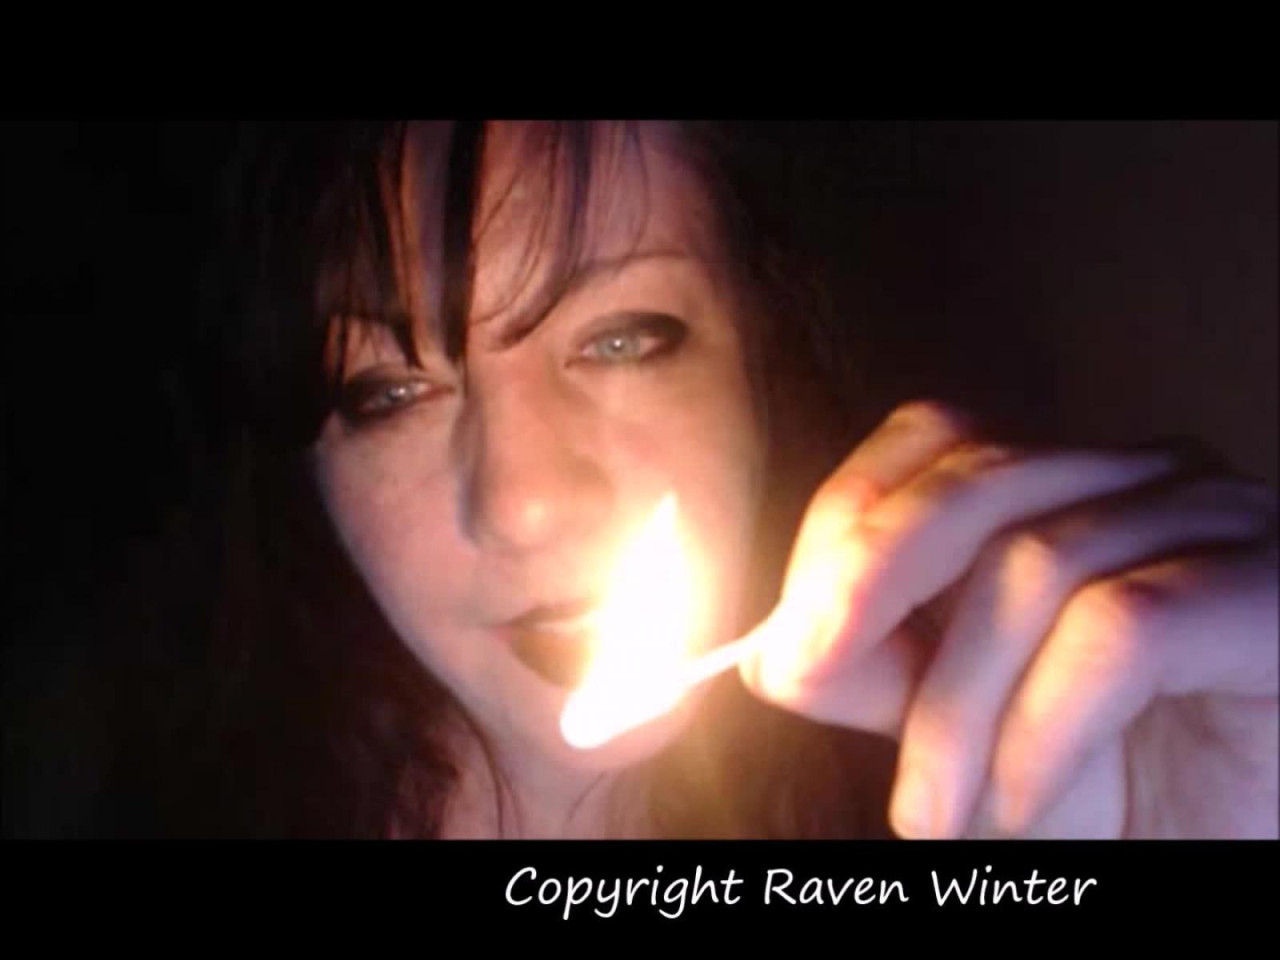 raven_winter adult download release [2021/12/18]